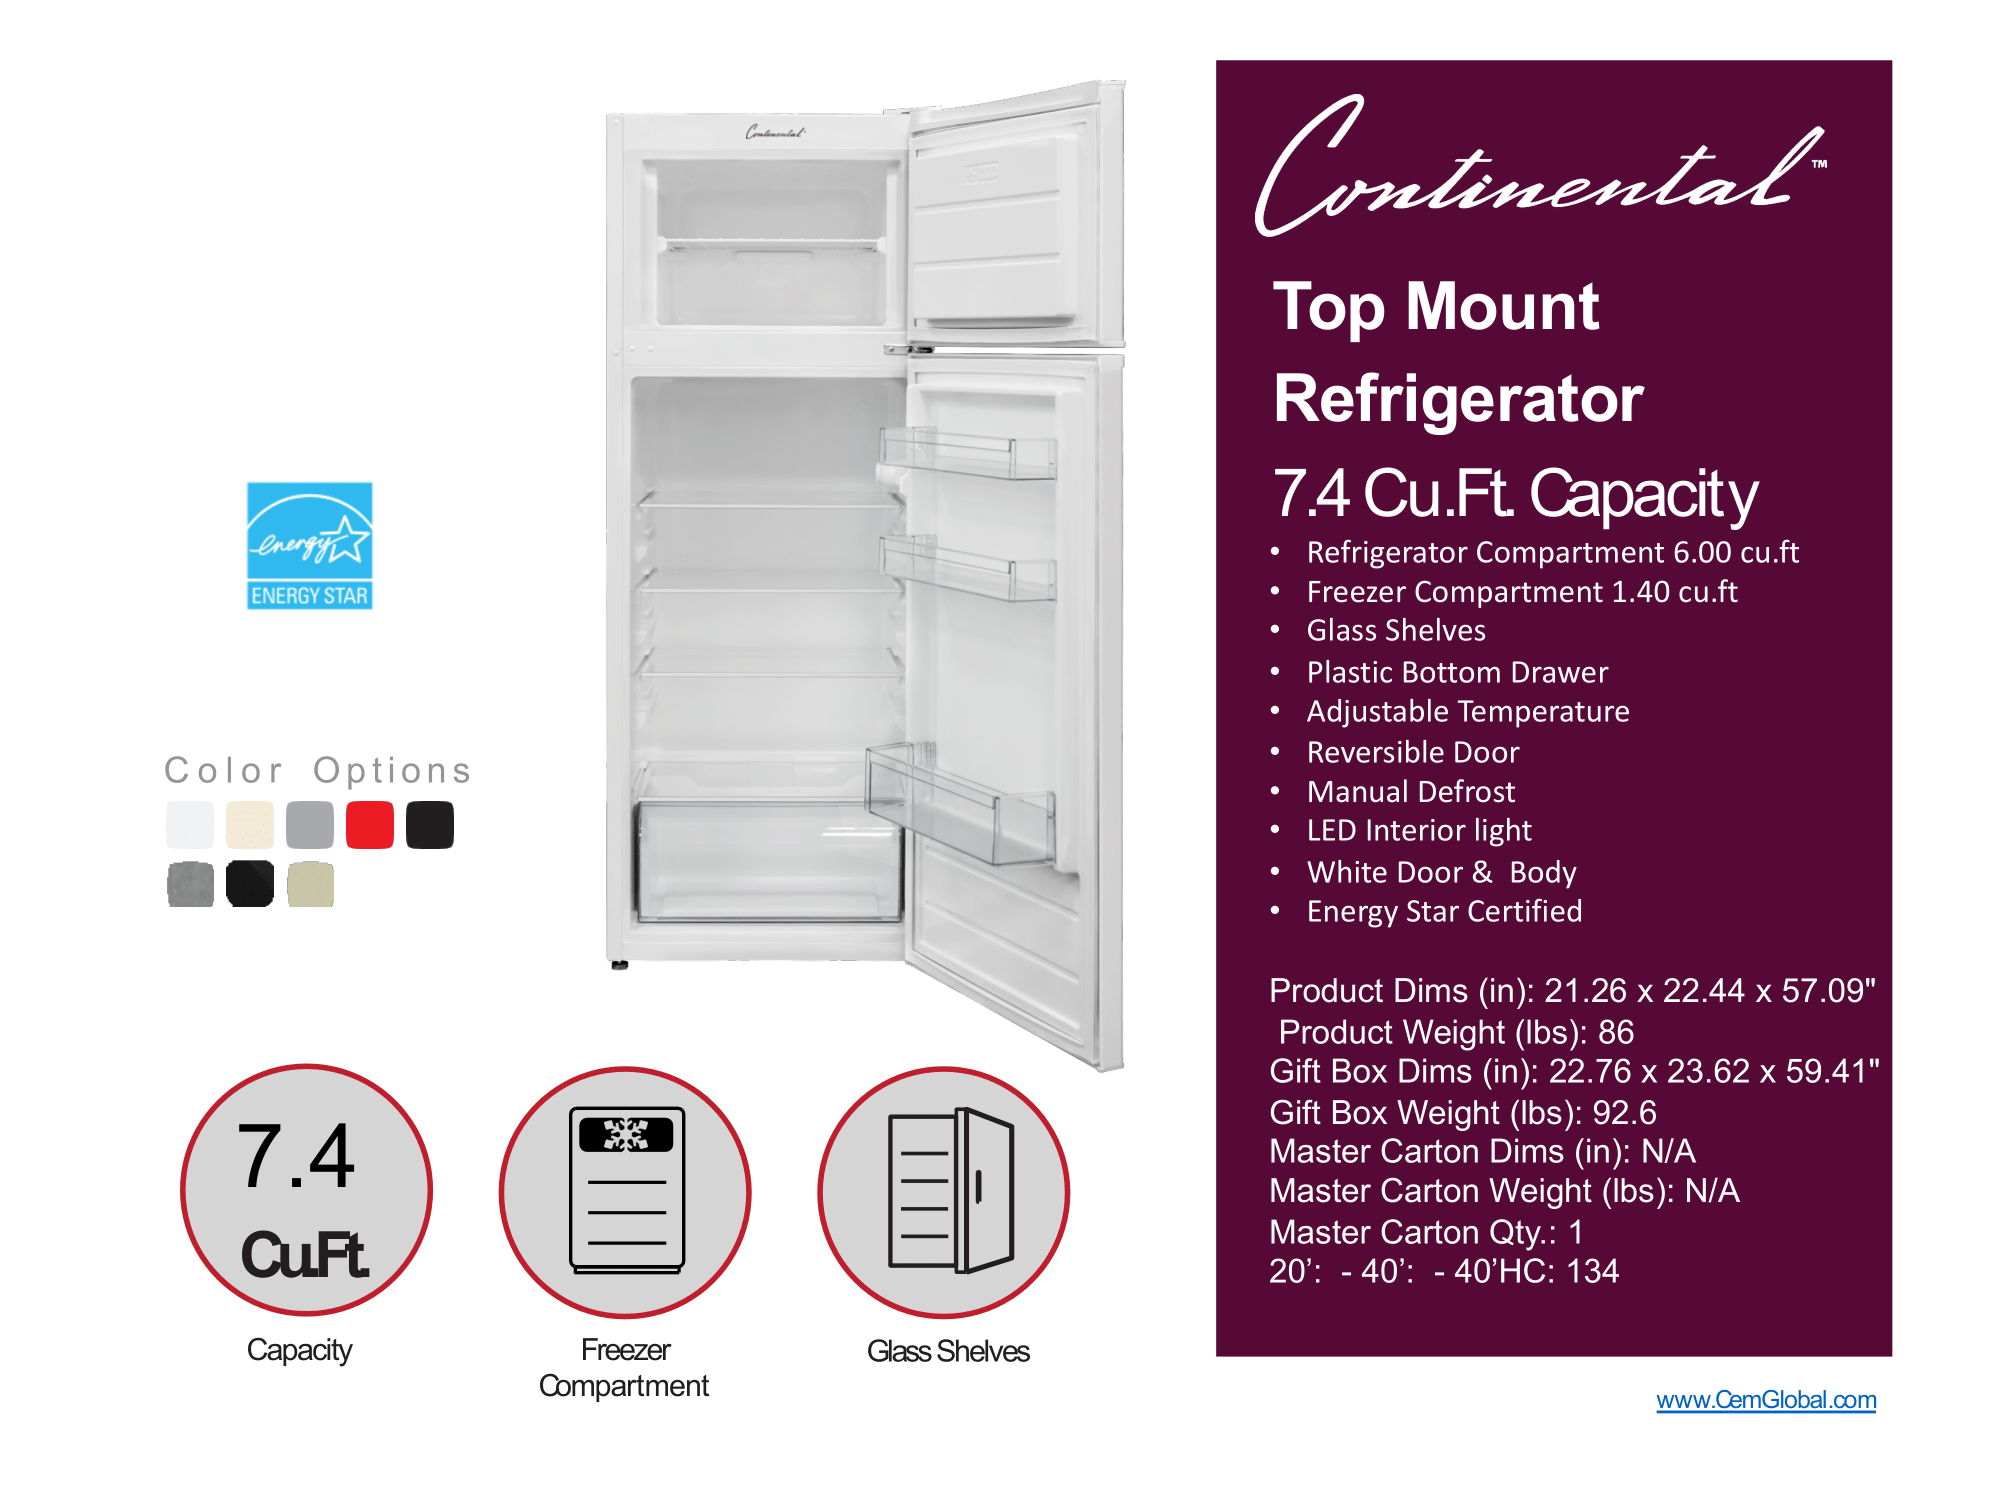 Top Mount Refrigerator 7.4 Cu.Ft. Capacity